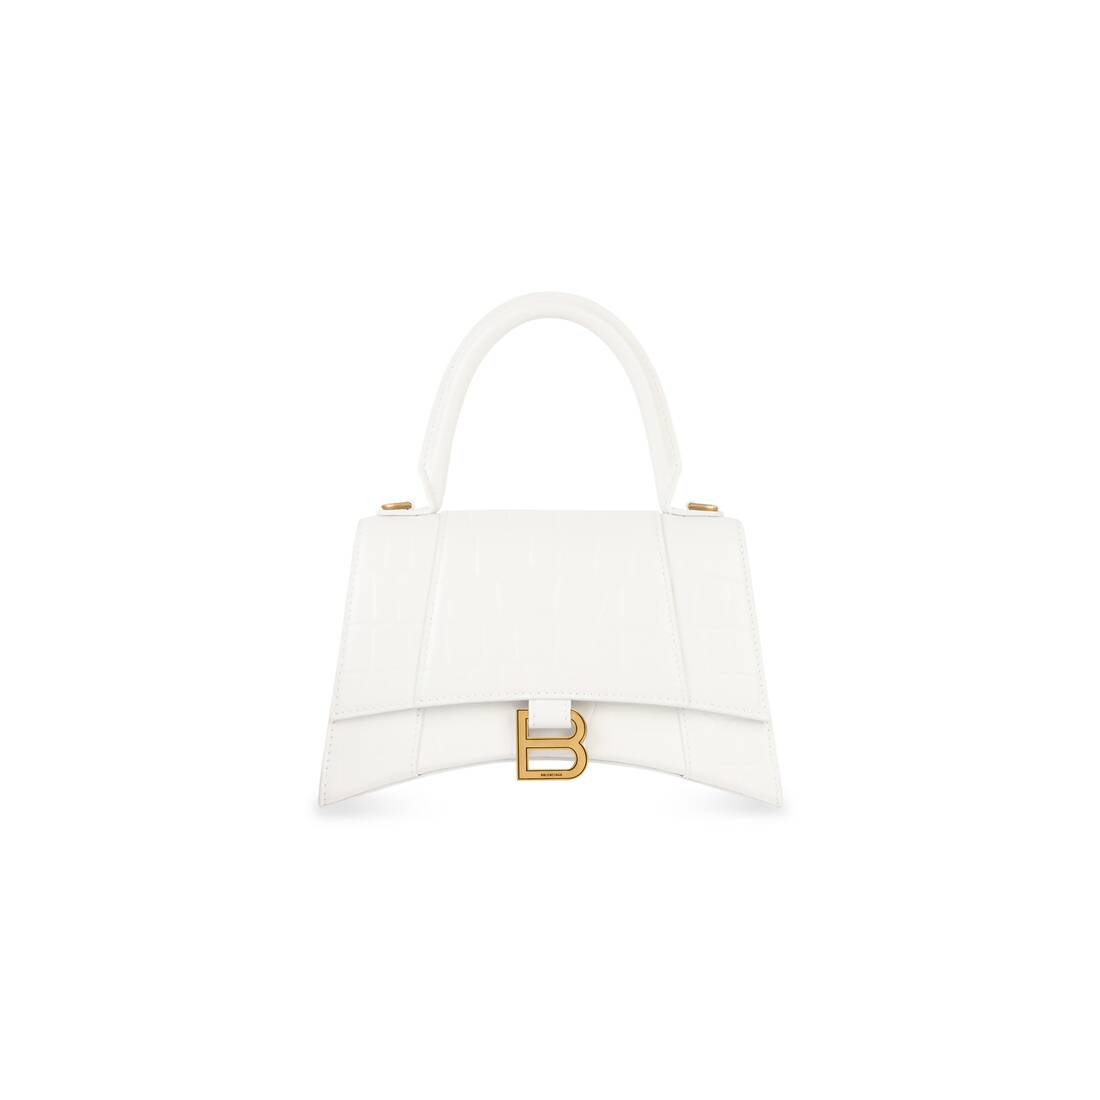 BALENCIAGA Hourglass top handle XS crocodileprint leather bag  White   Balenciaga shoulder bag 592833 1LR6Y online on GIGLIOCOM